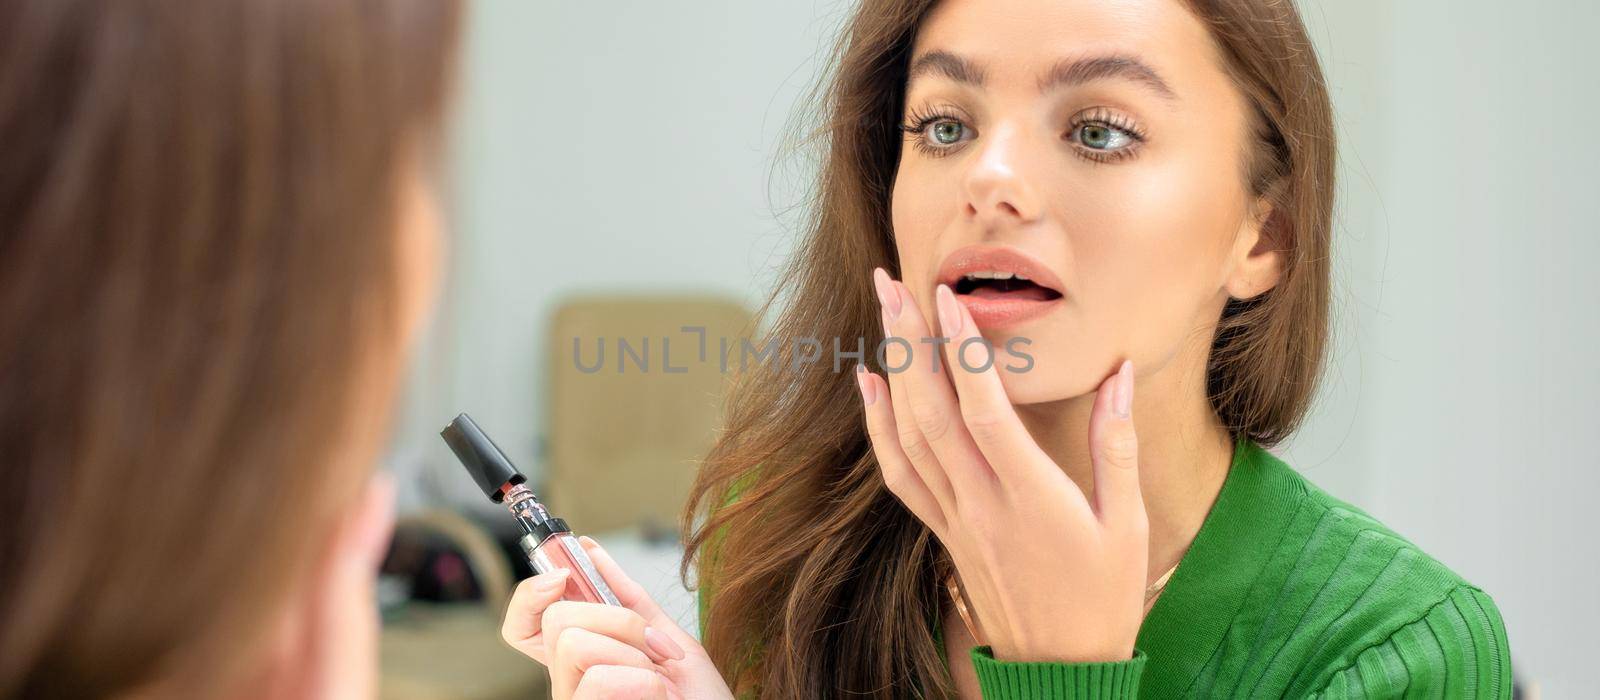 Woman applies lipstick on her lips by okskukuruza